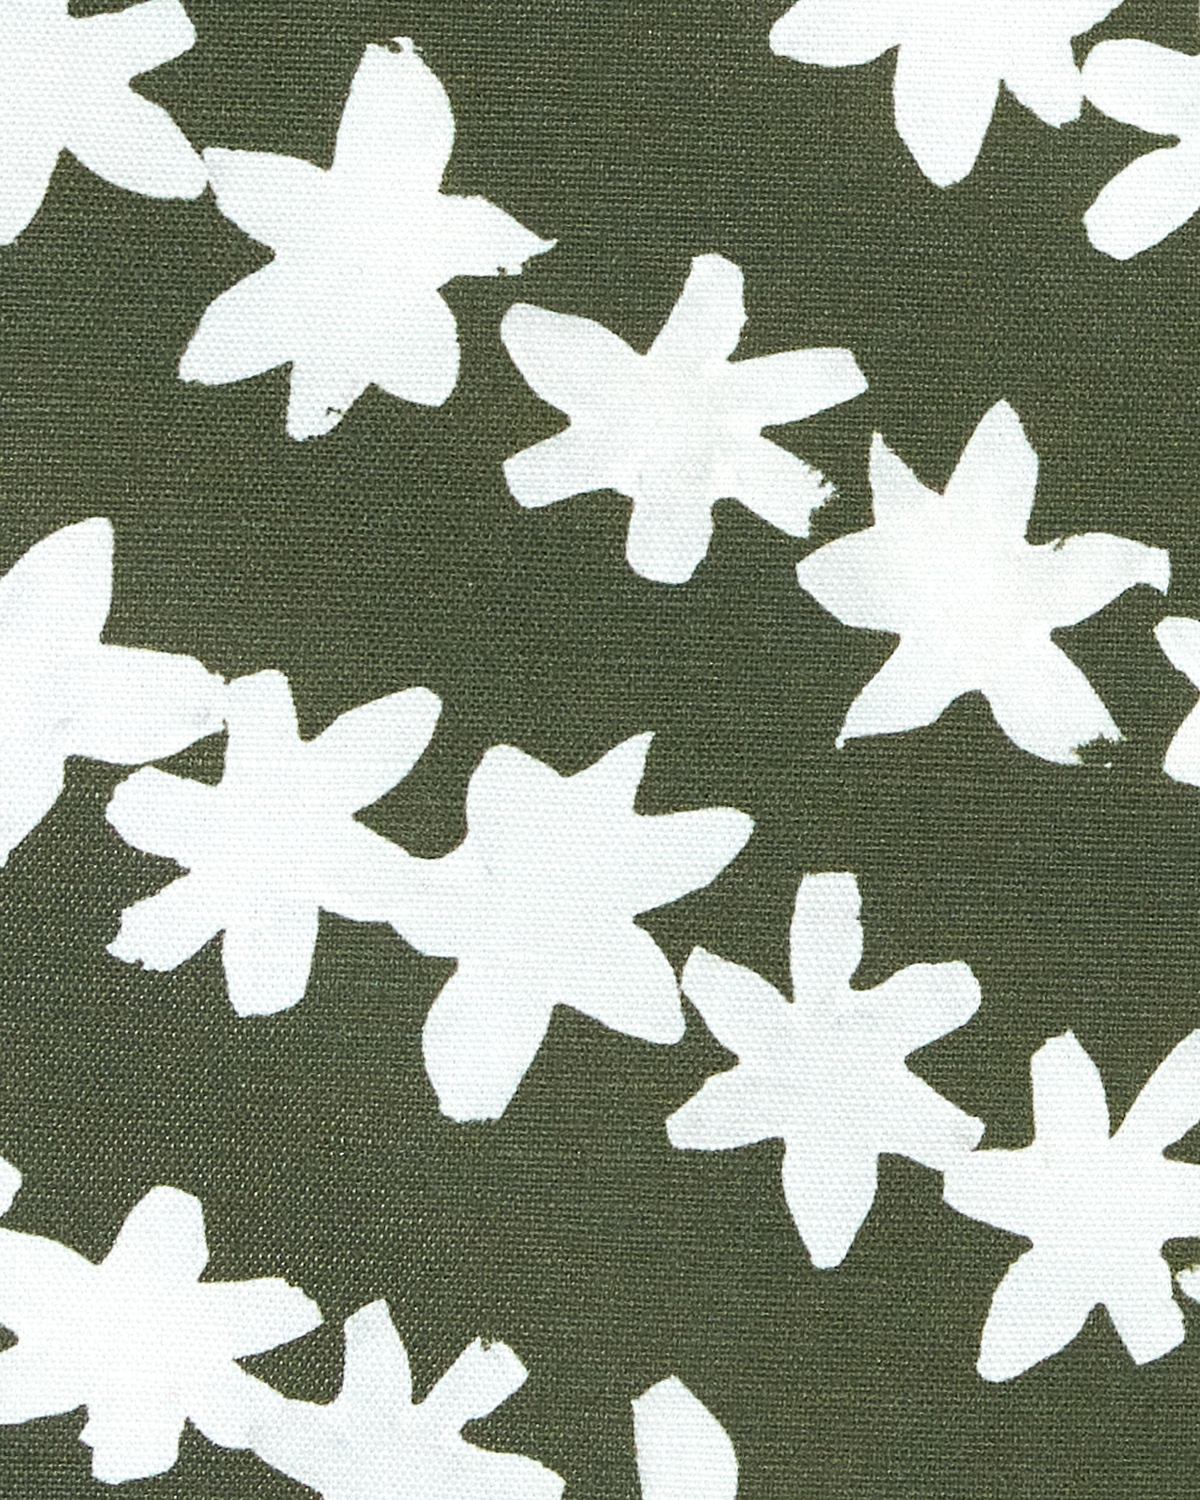 Stamped Garland Fabric in Dark Olive